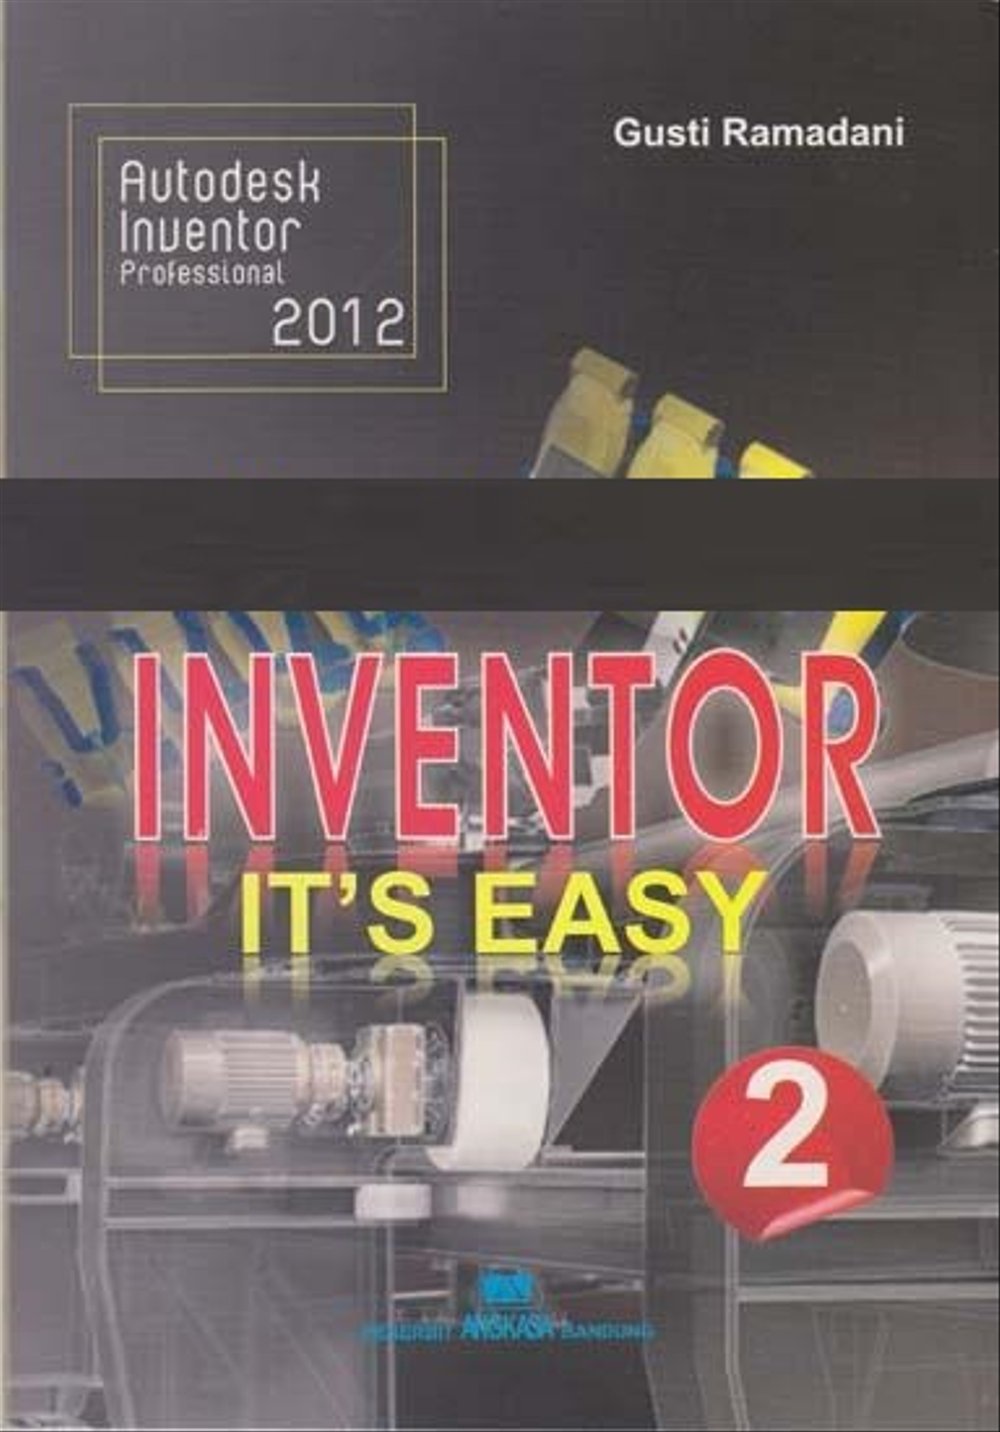 autodesk inventor 2012 professional